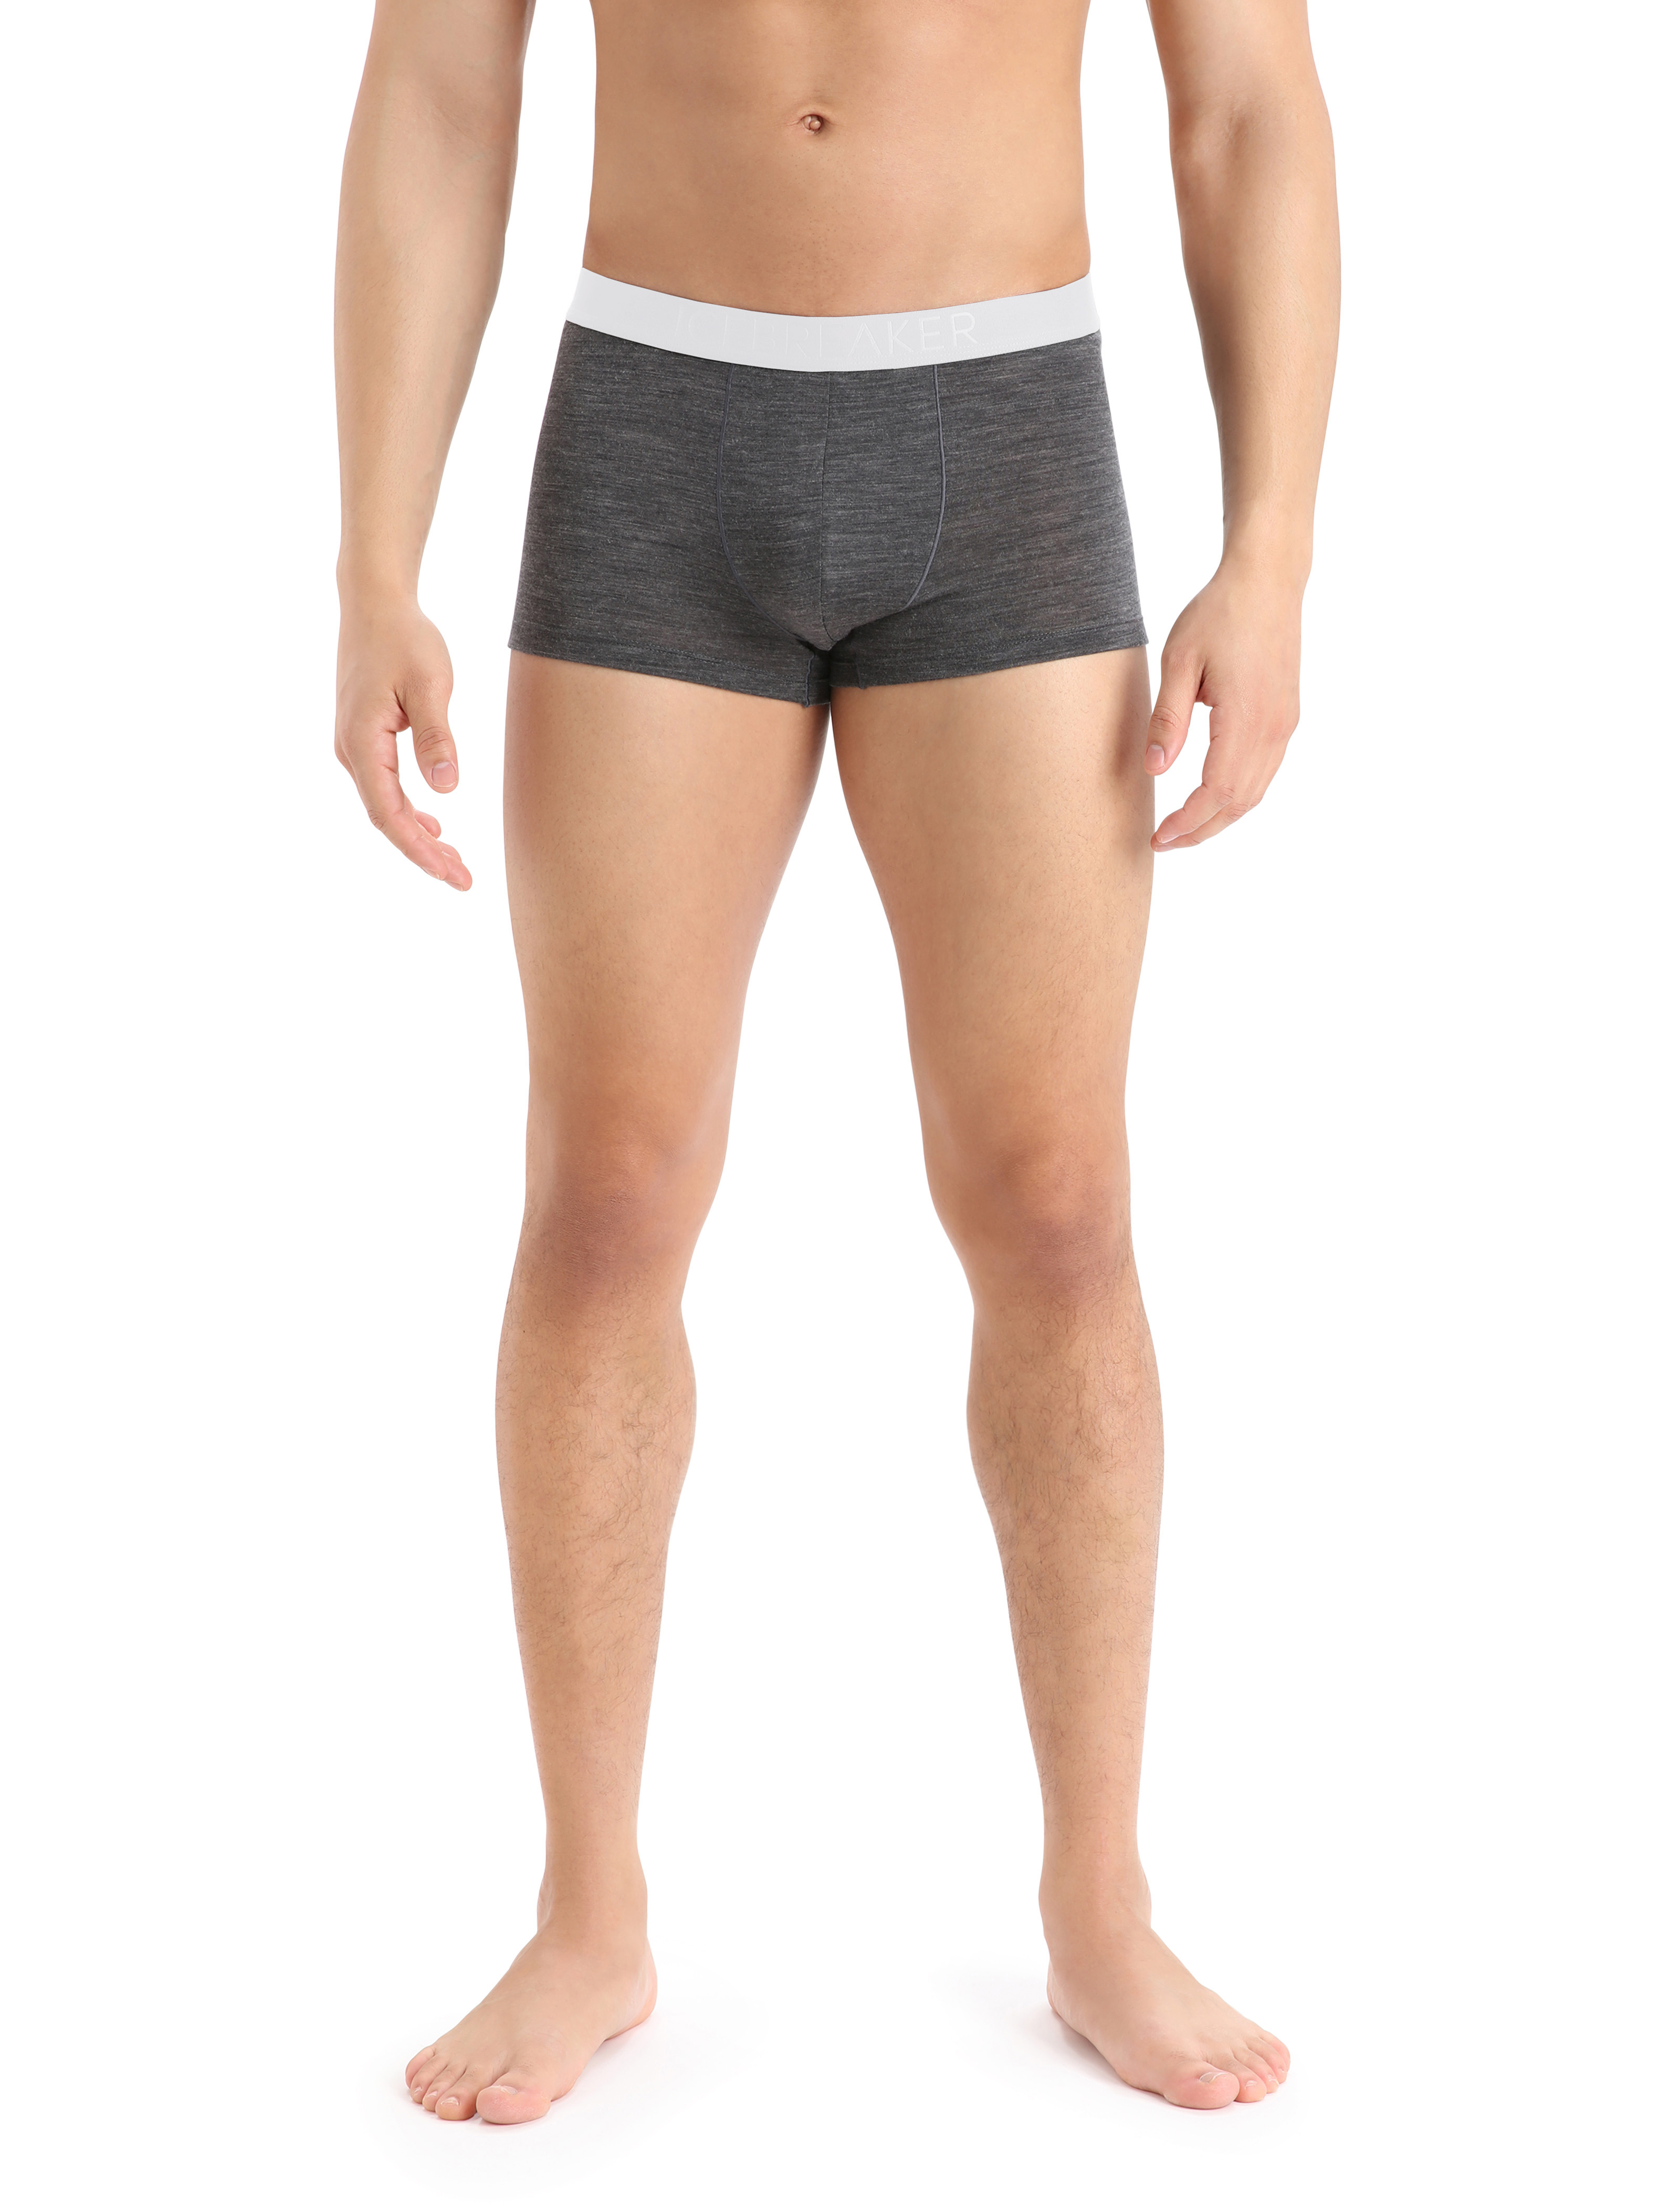 icebreaker Functional underwear boxer shorts ANATOMICA made of merino wool  in black/ gray